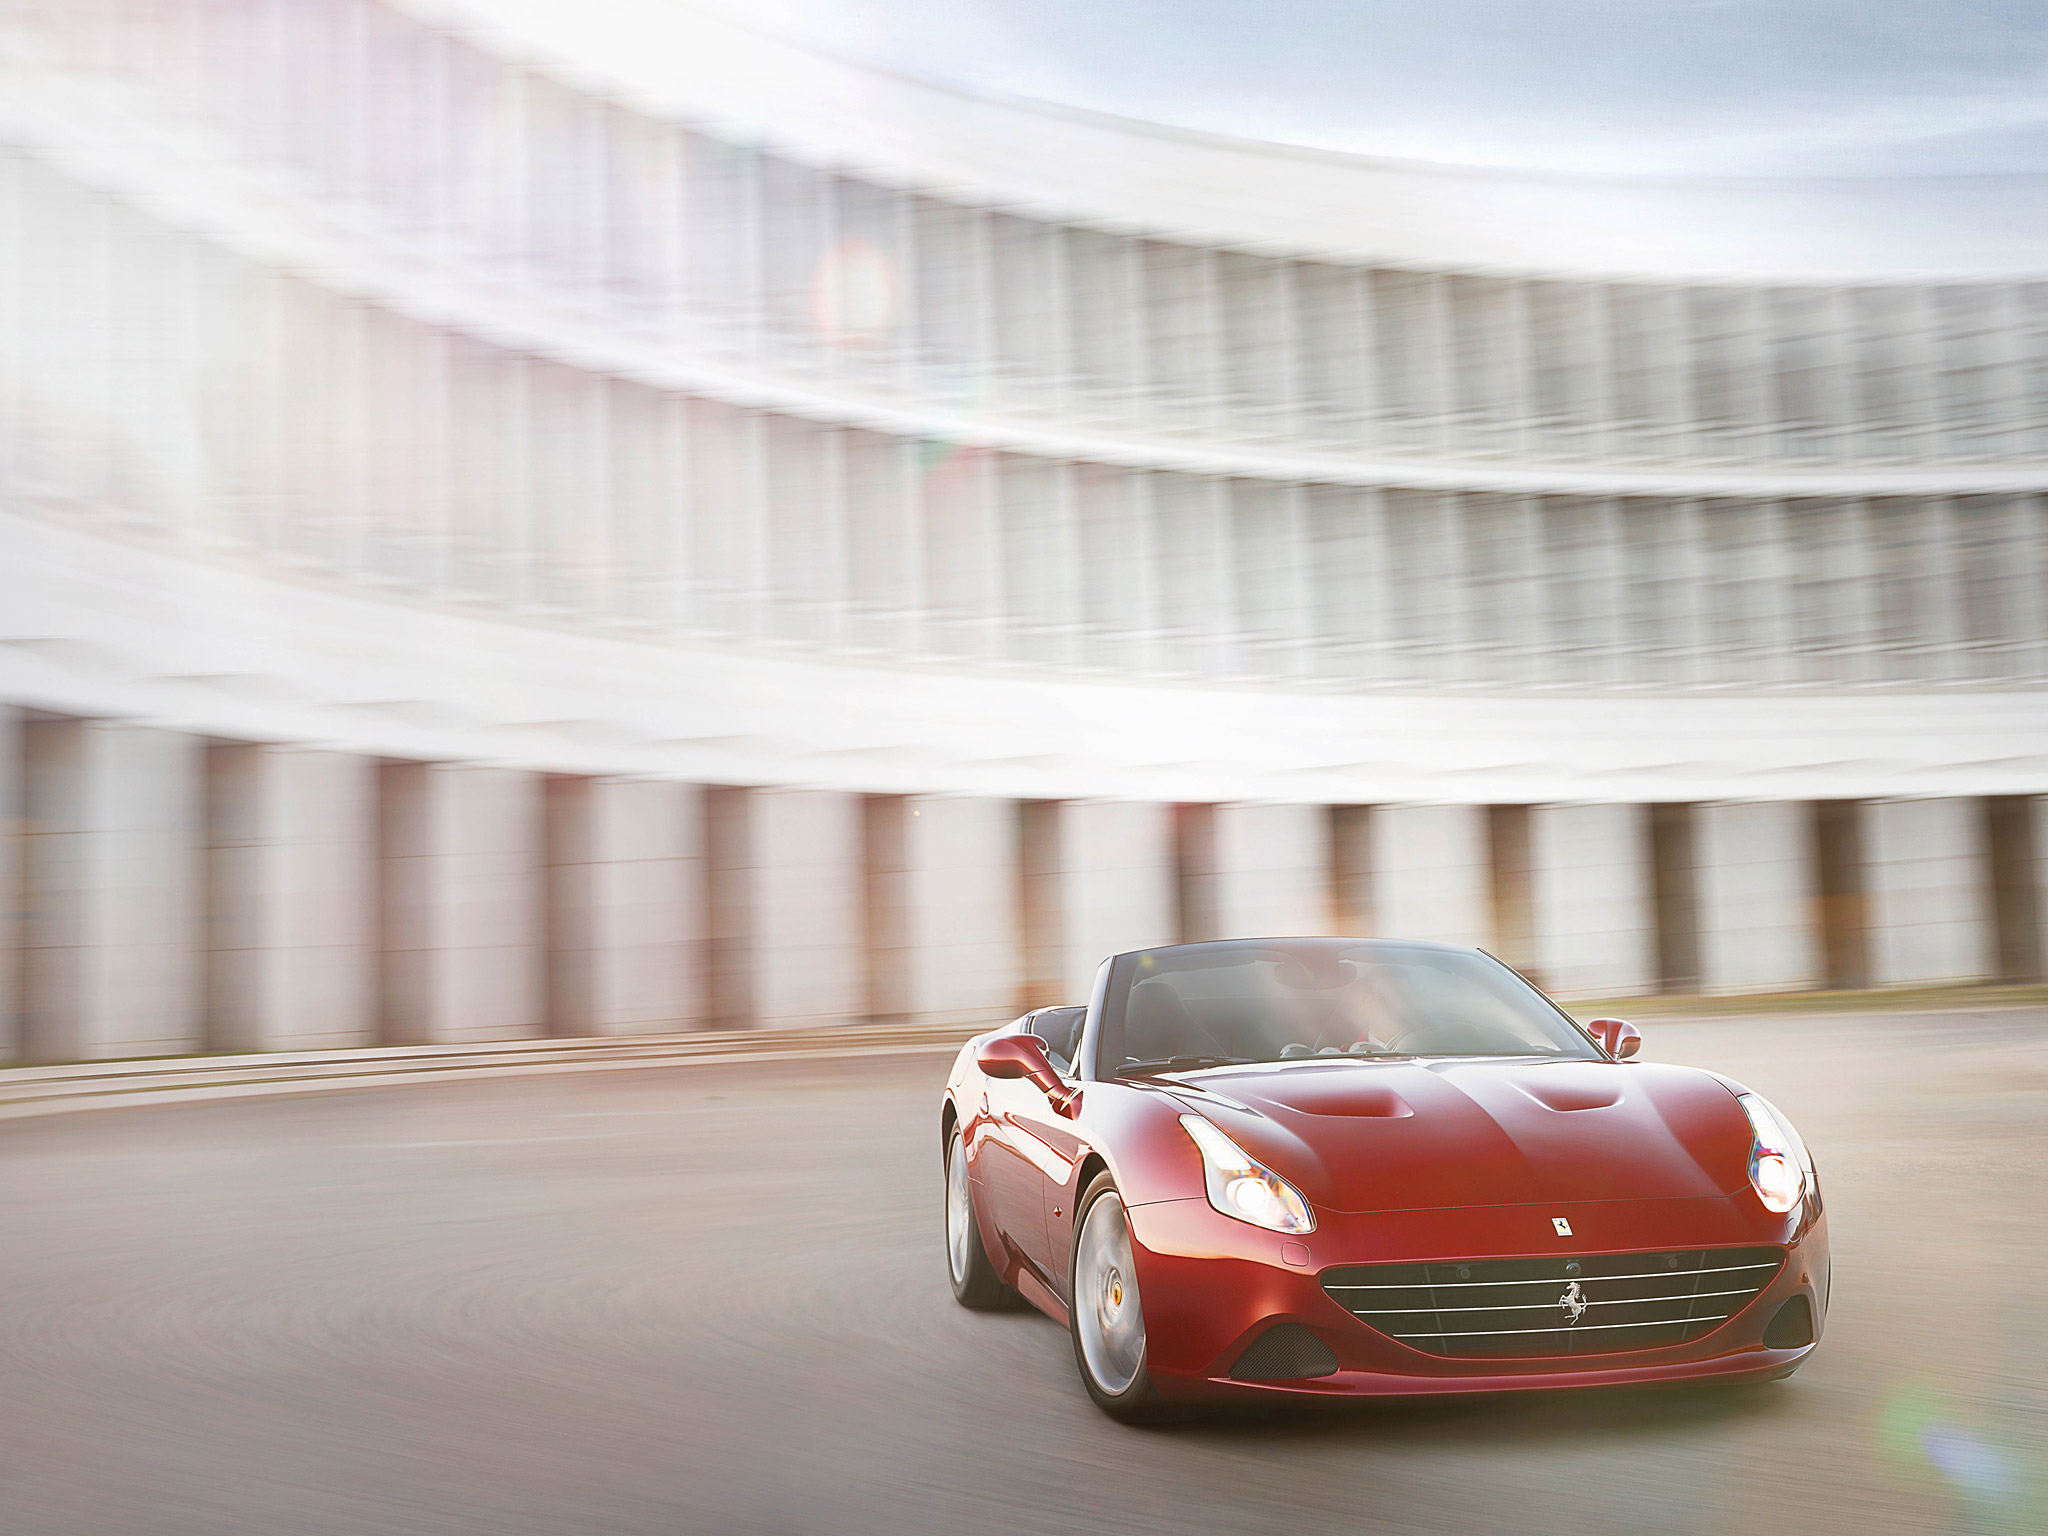  2015 Ferrari California T  Wallpaper.